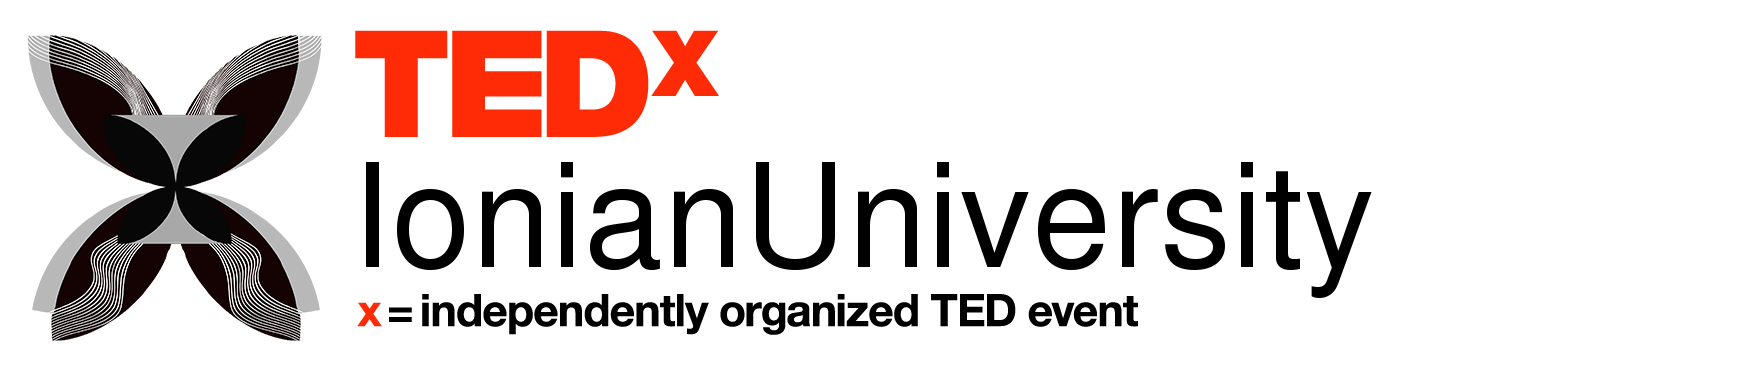 TEDx IonianUniversity